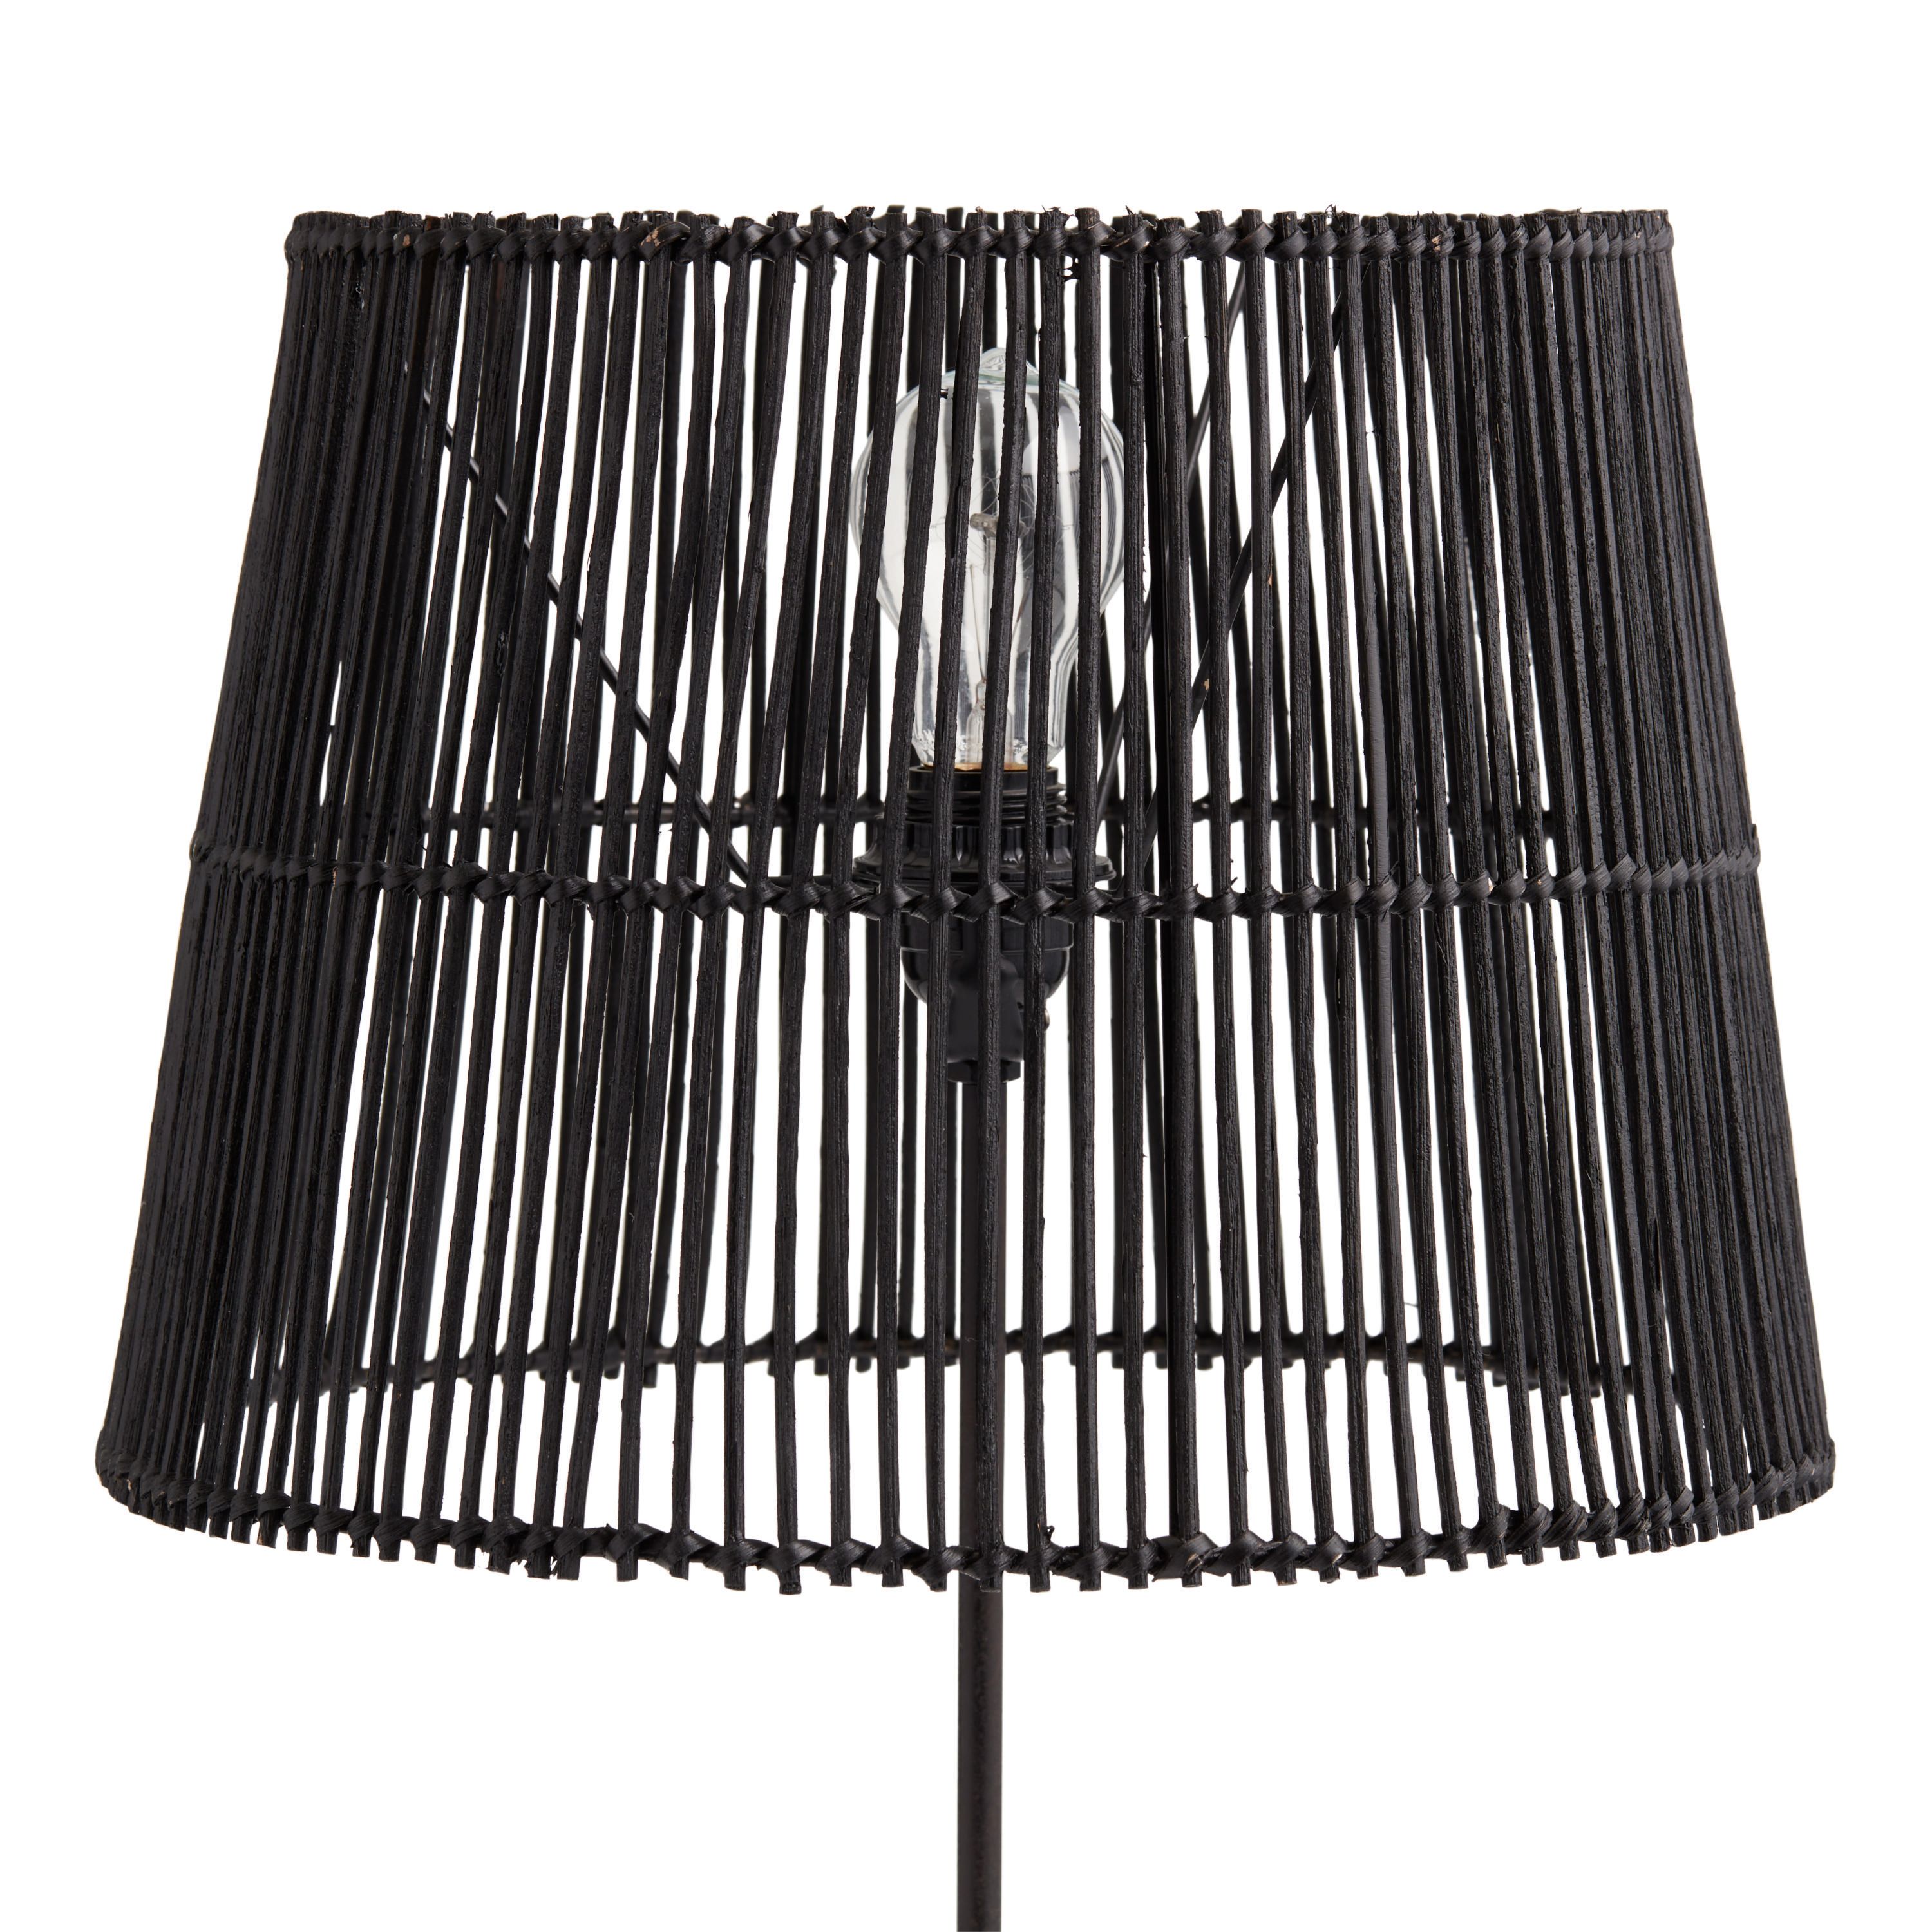 Black Rattan Table Lamp Shade | World Market